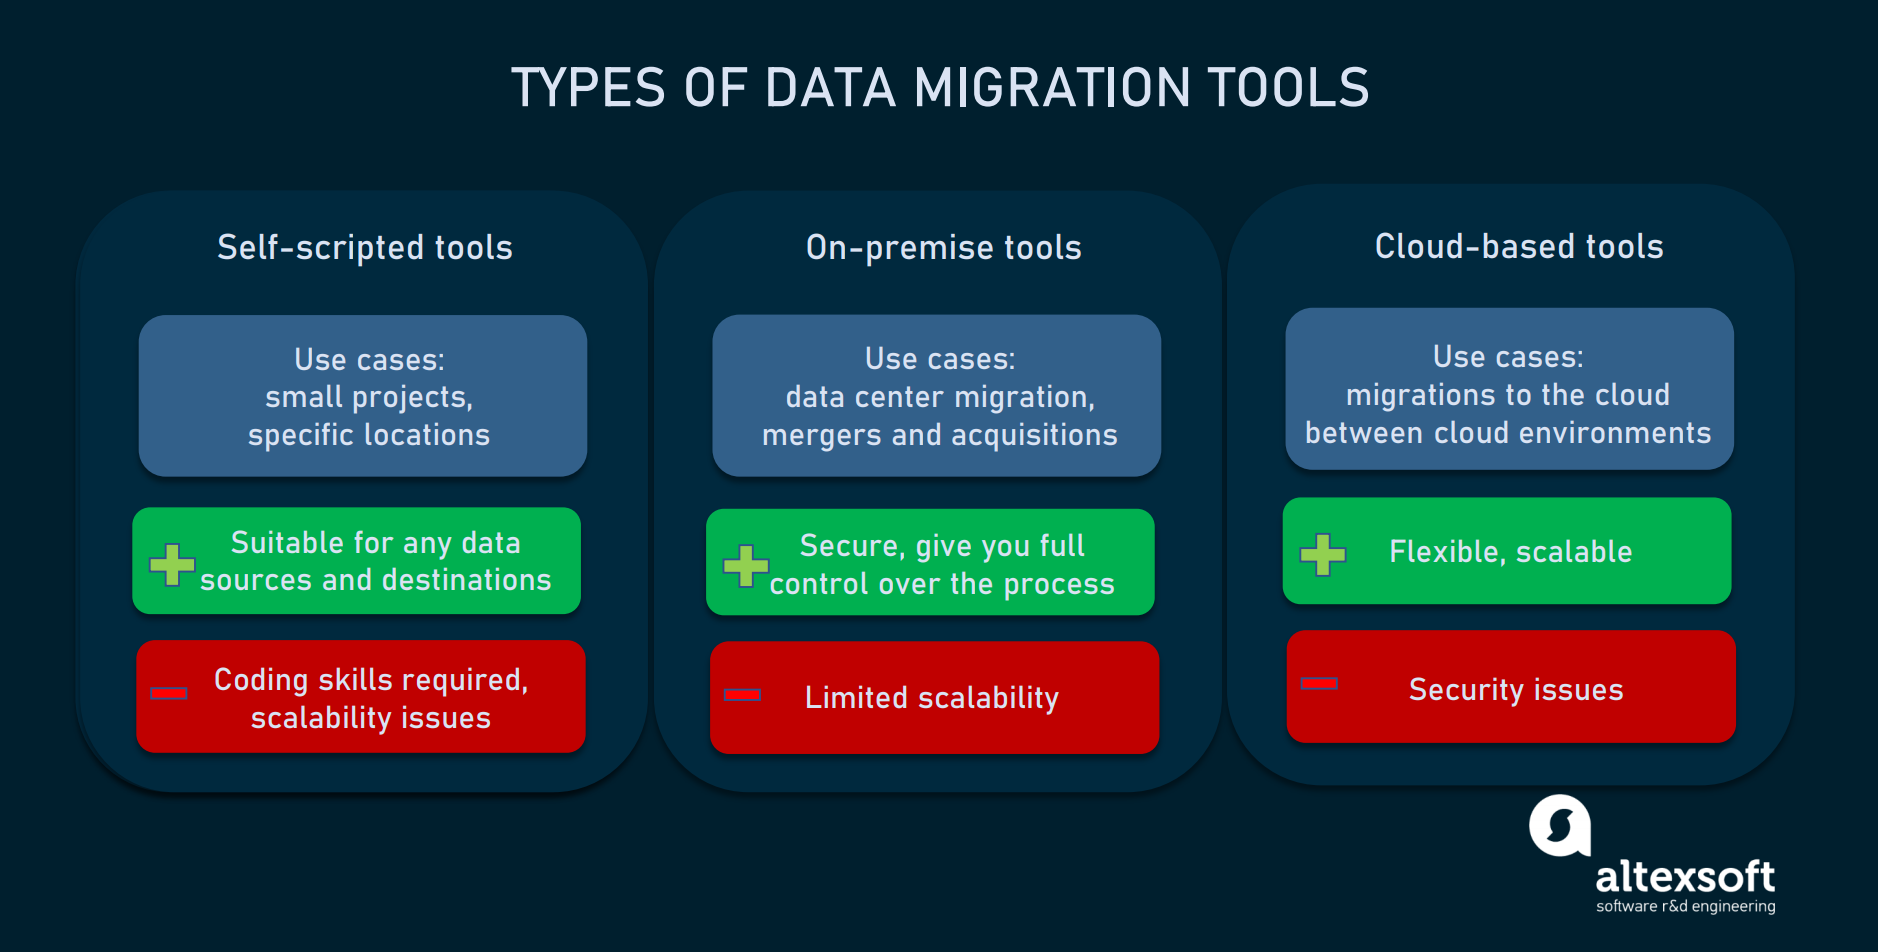 Data Migration Plan Template